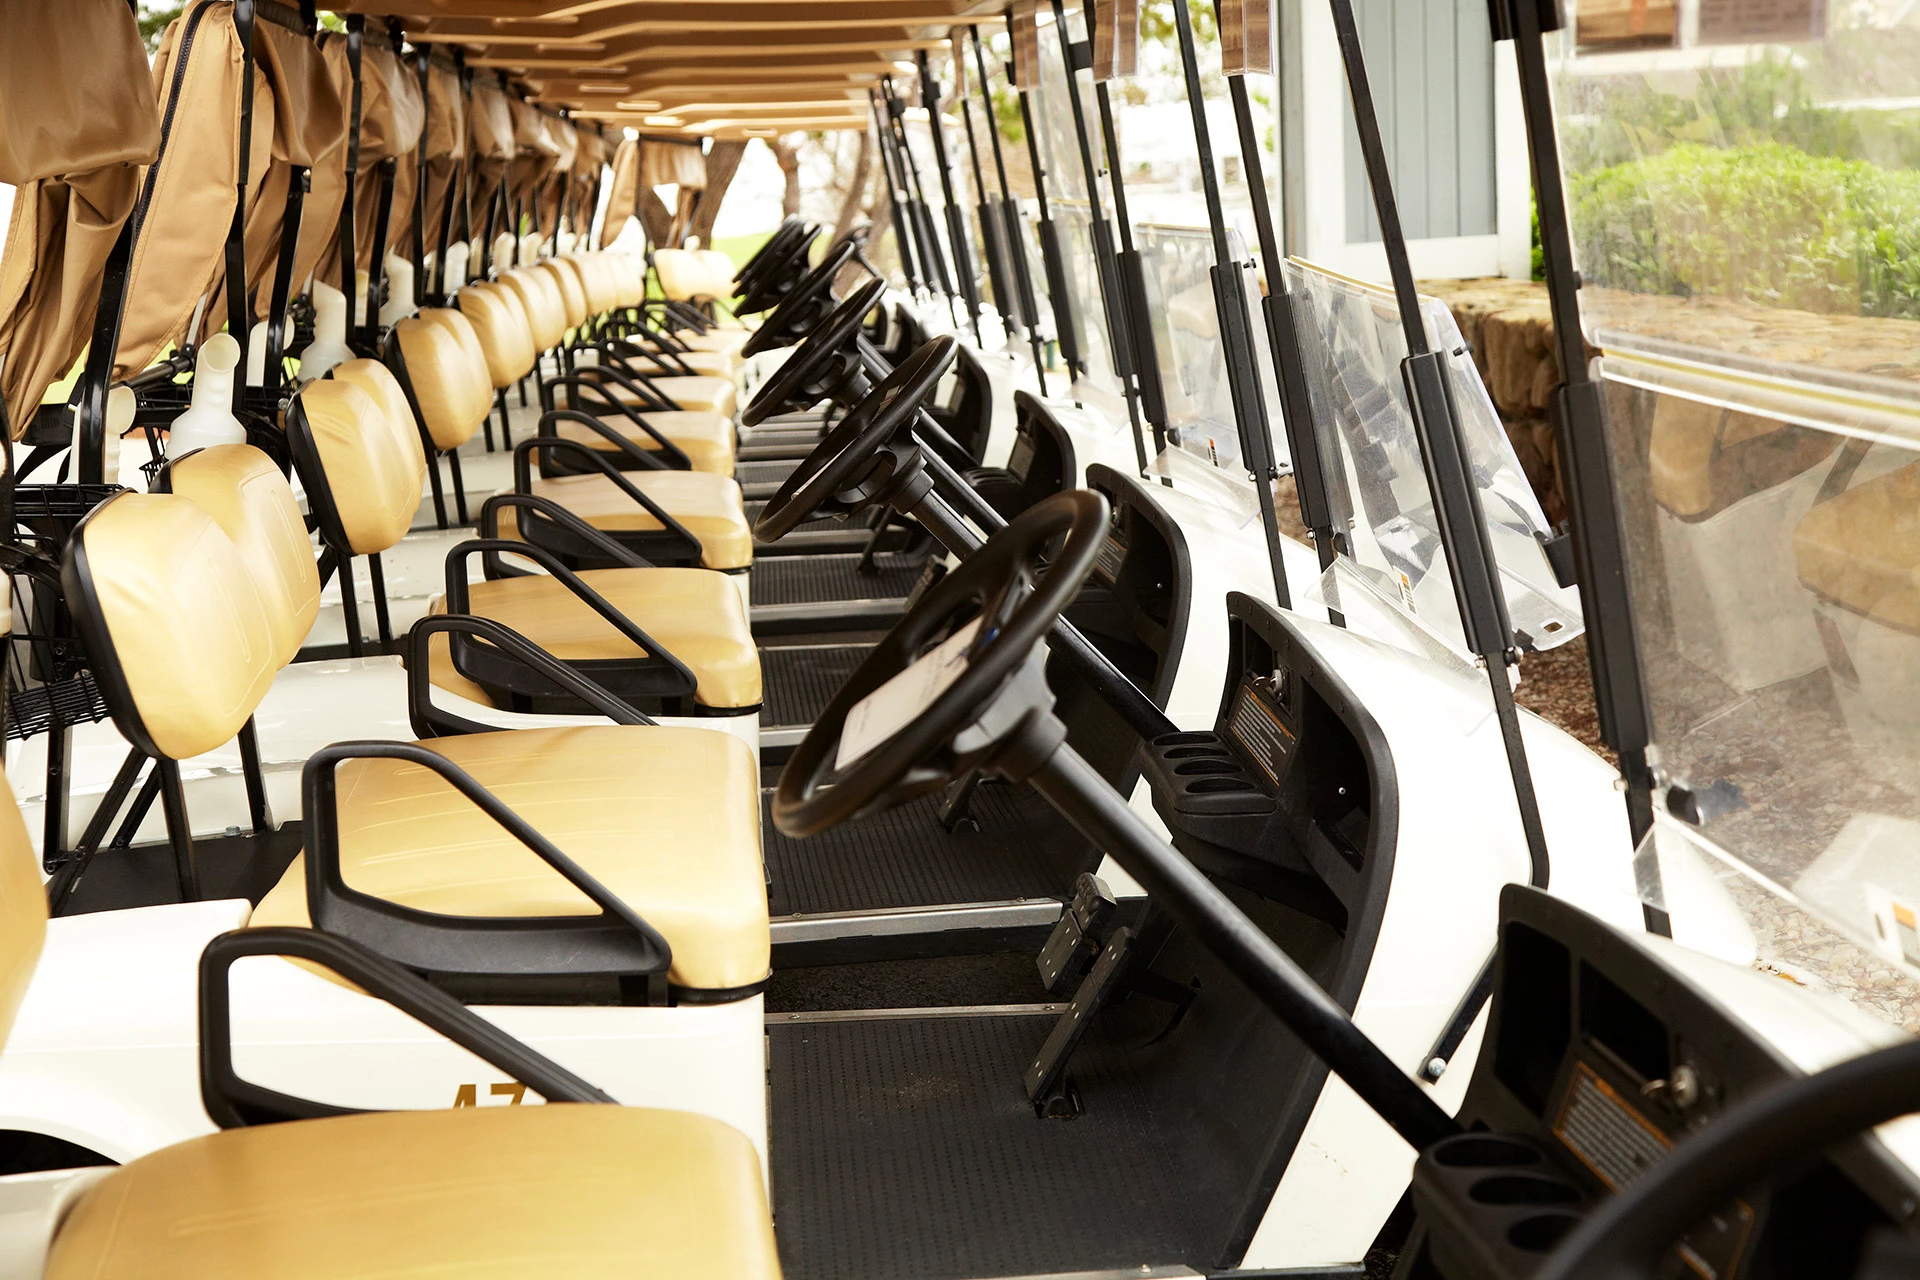 Nags Head Golf Links - Golf Carts